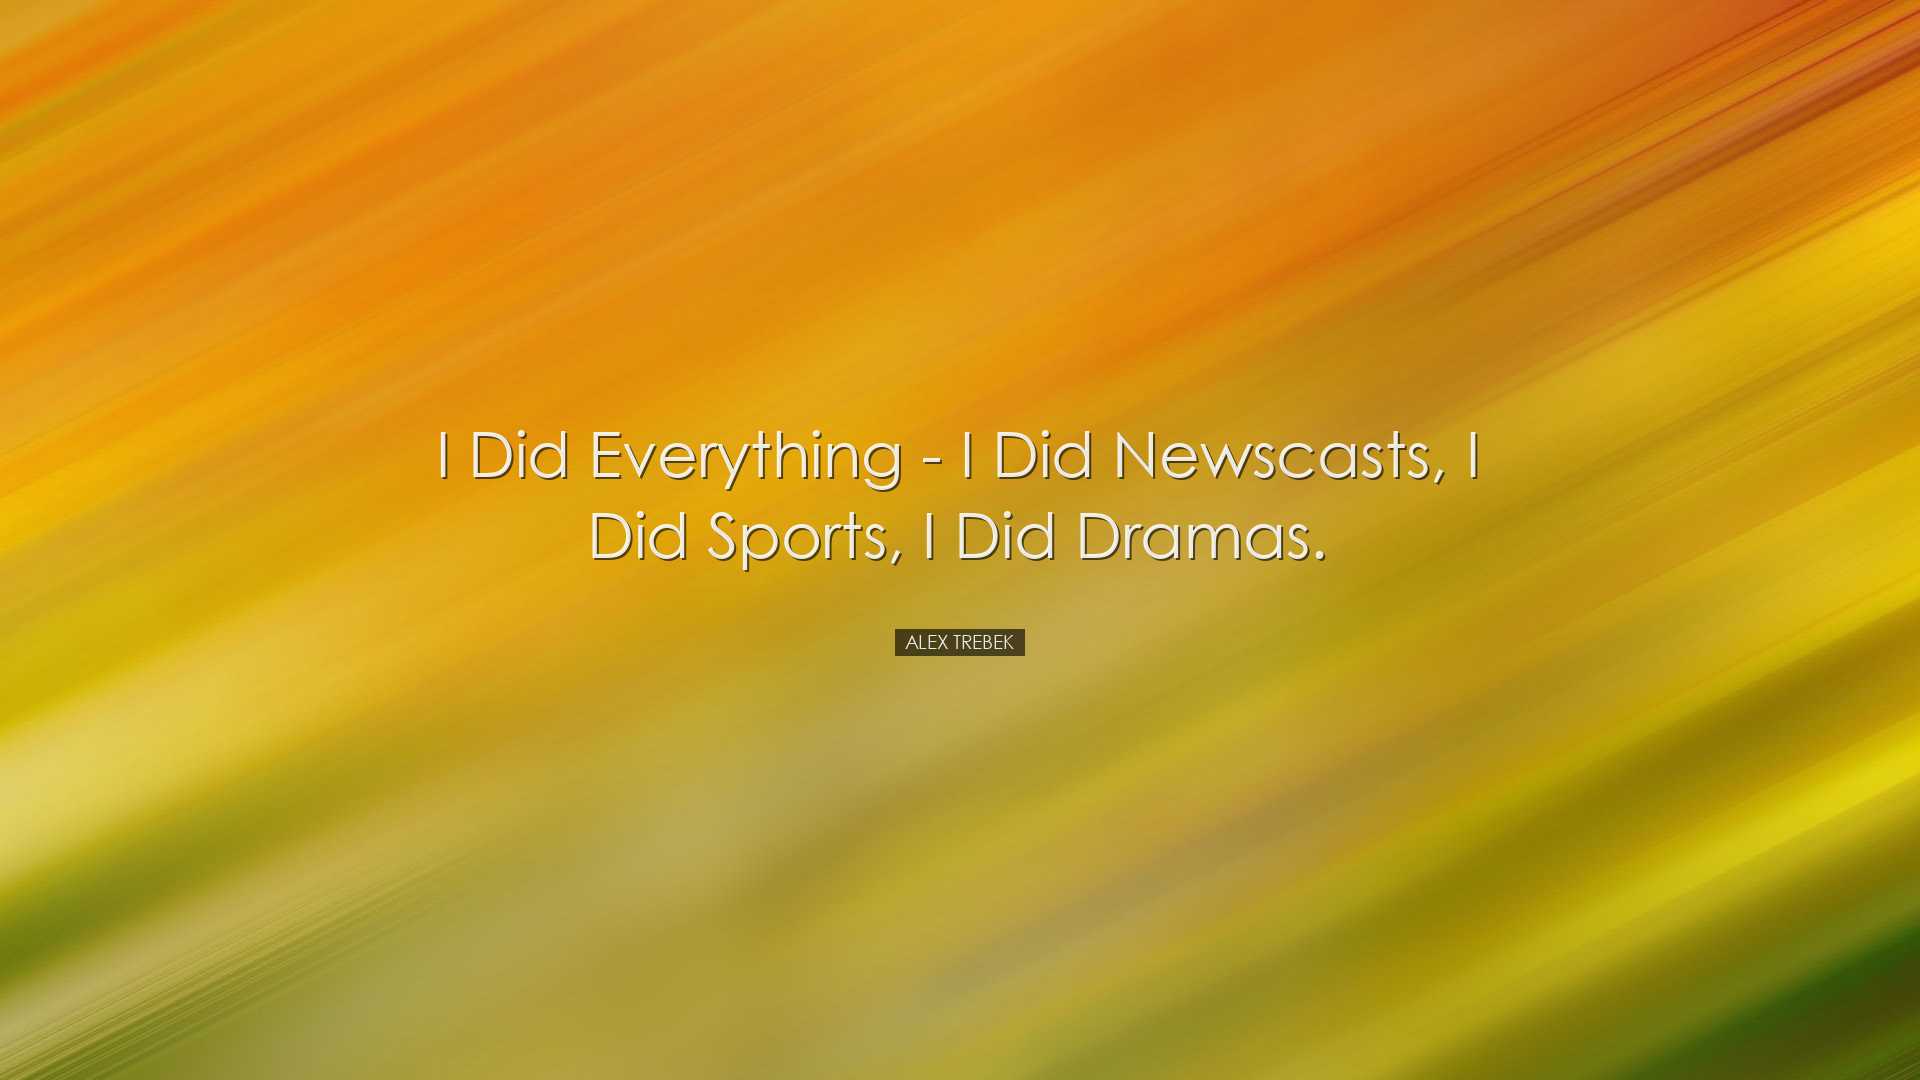 I did everything - I did newscasts, I did sports, I did dramas. -